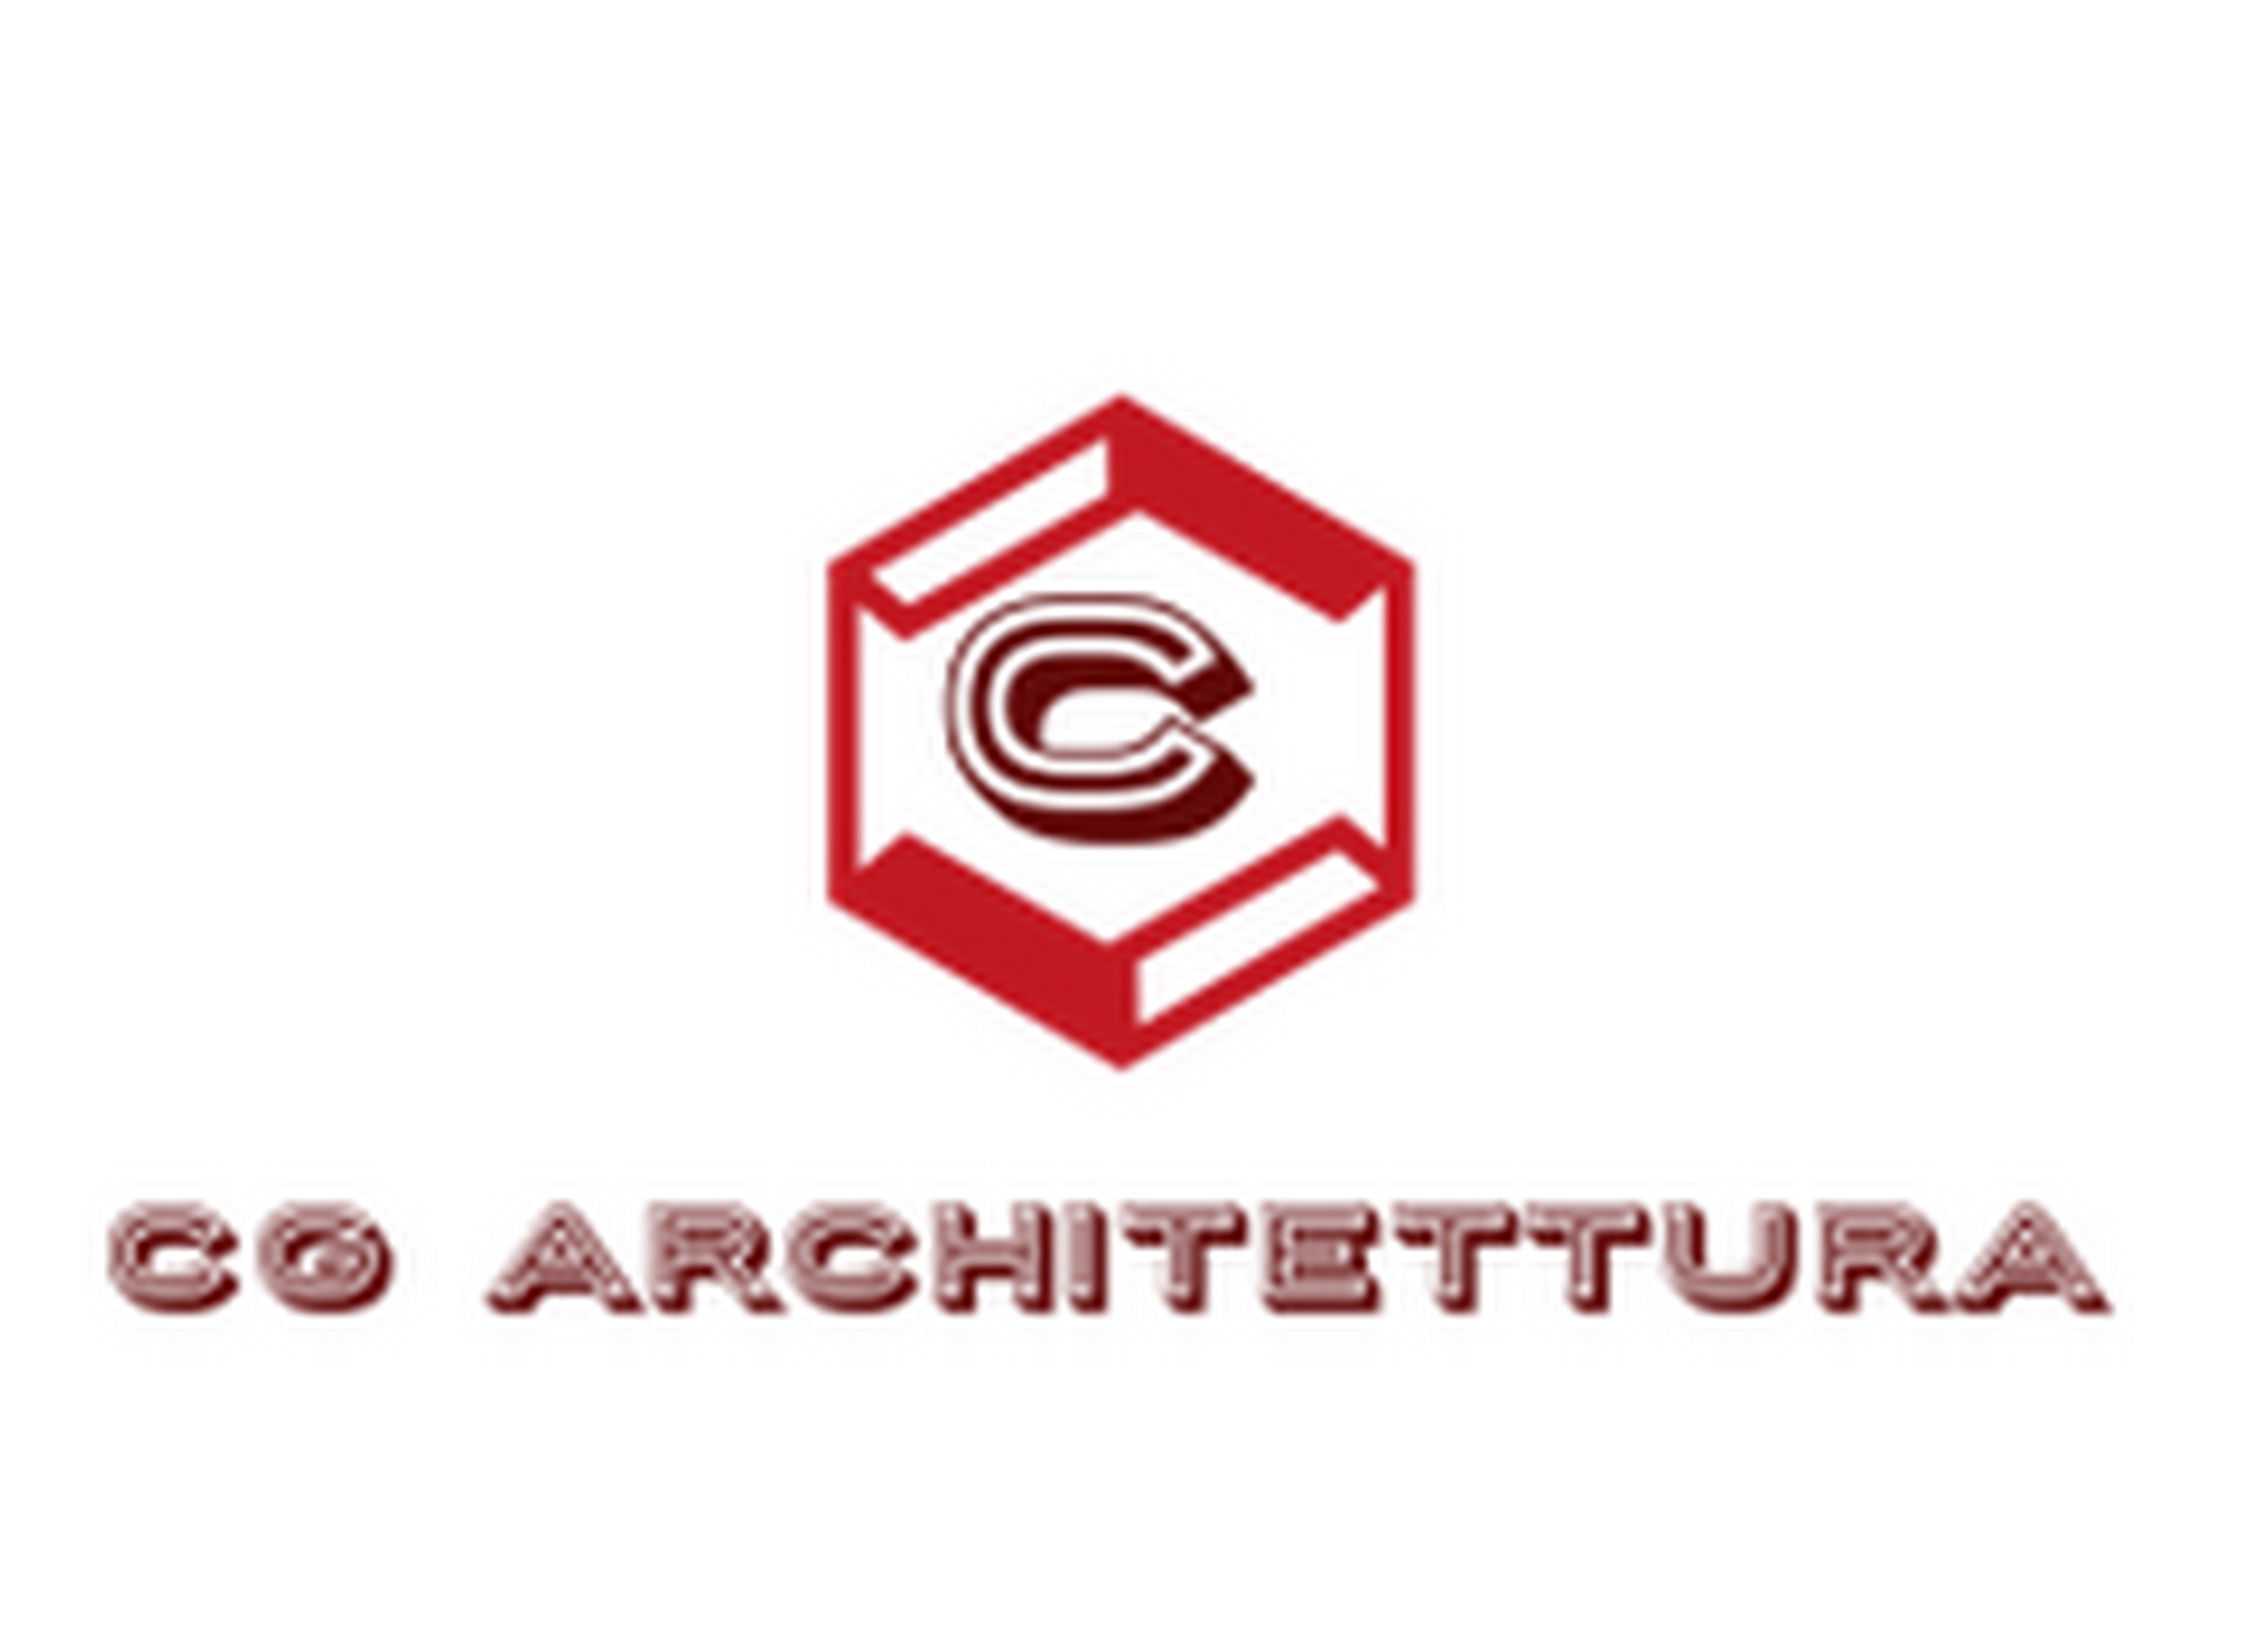 foto logo cg architettura